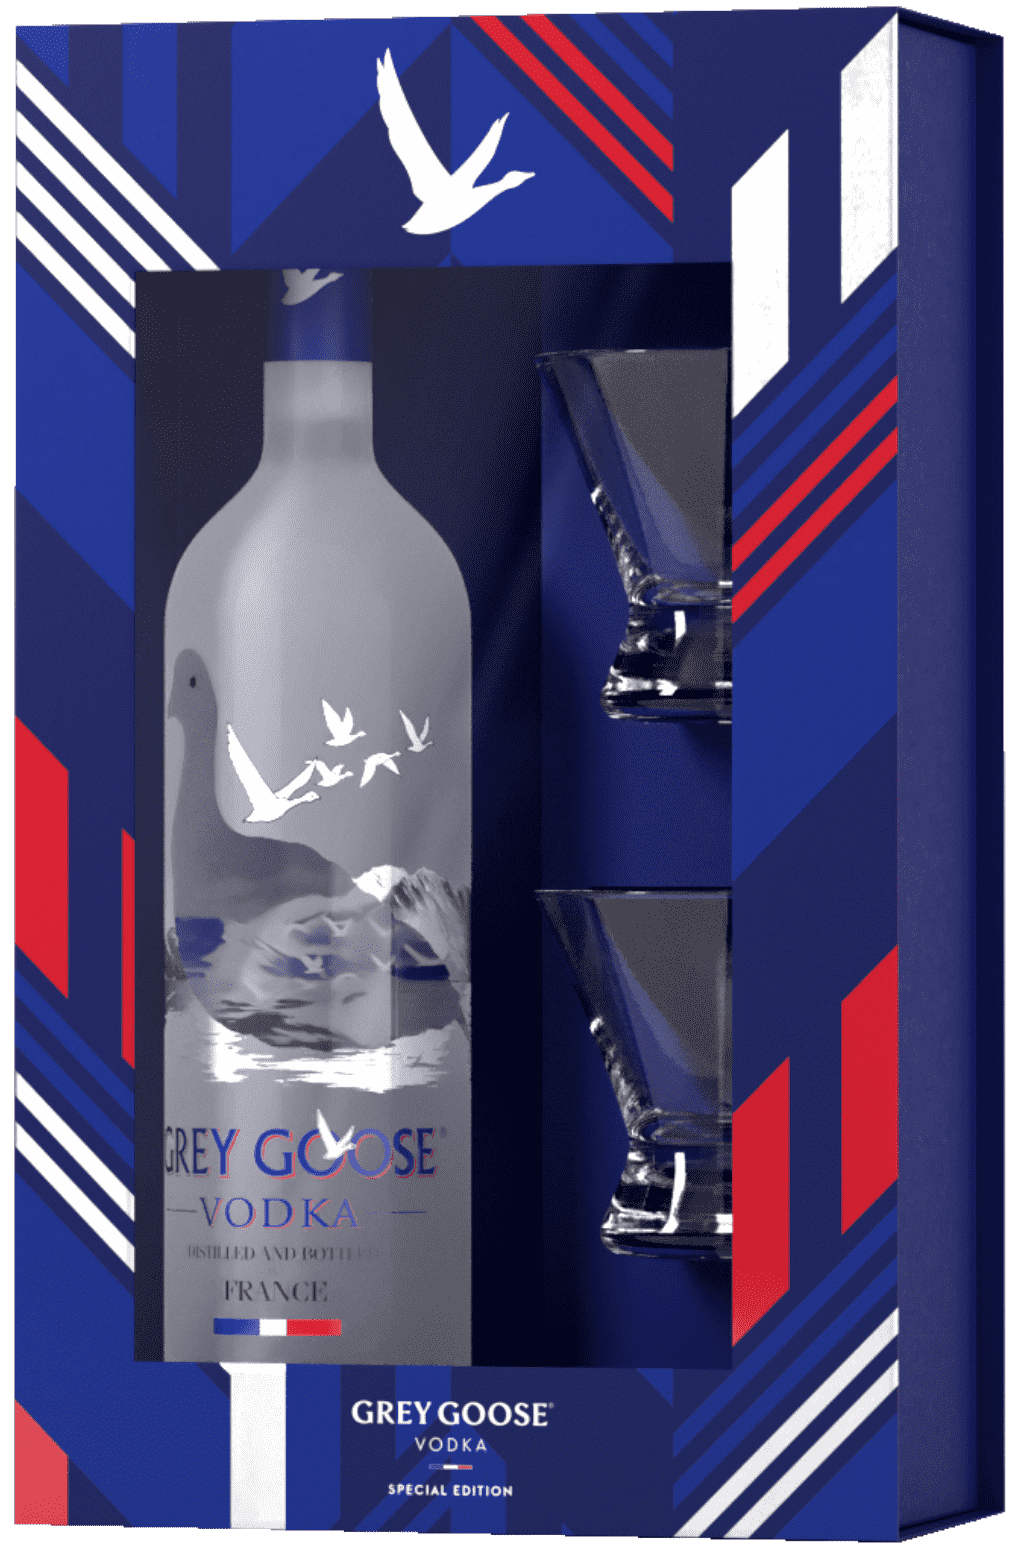 Grey Goose Vodka - 1.75 liters